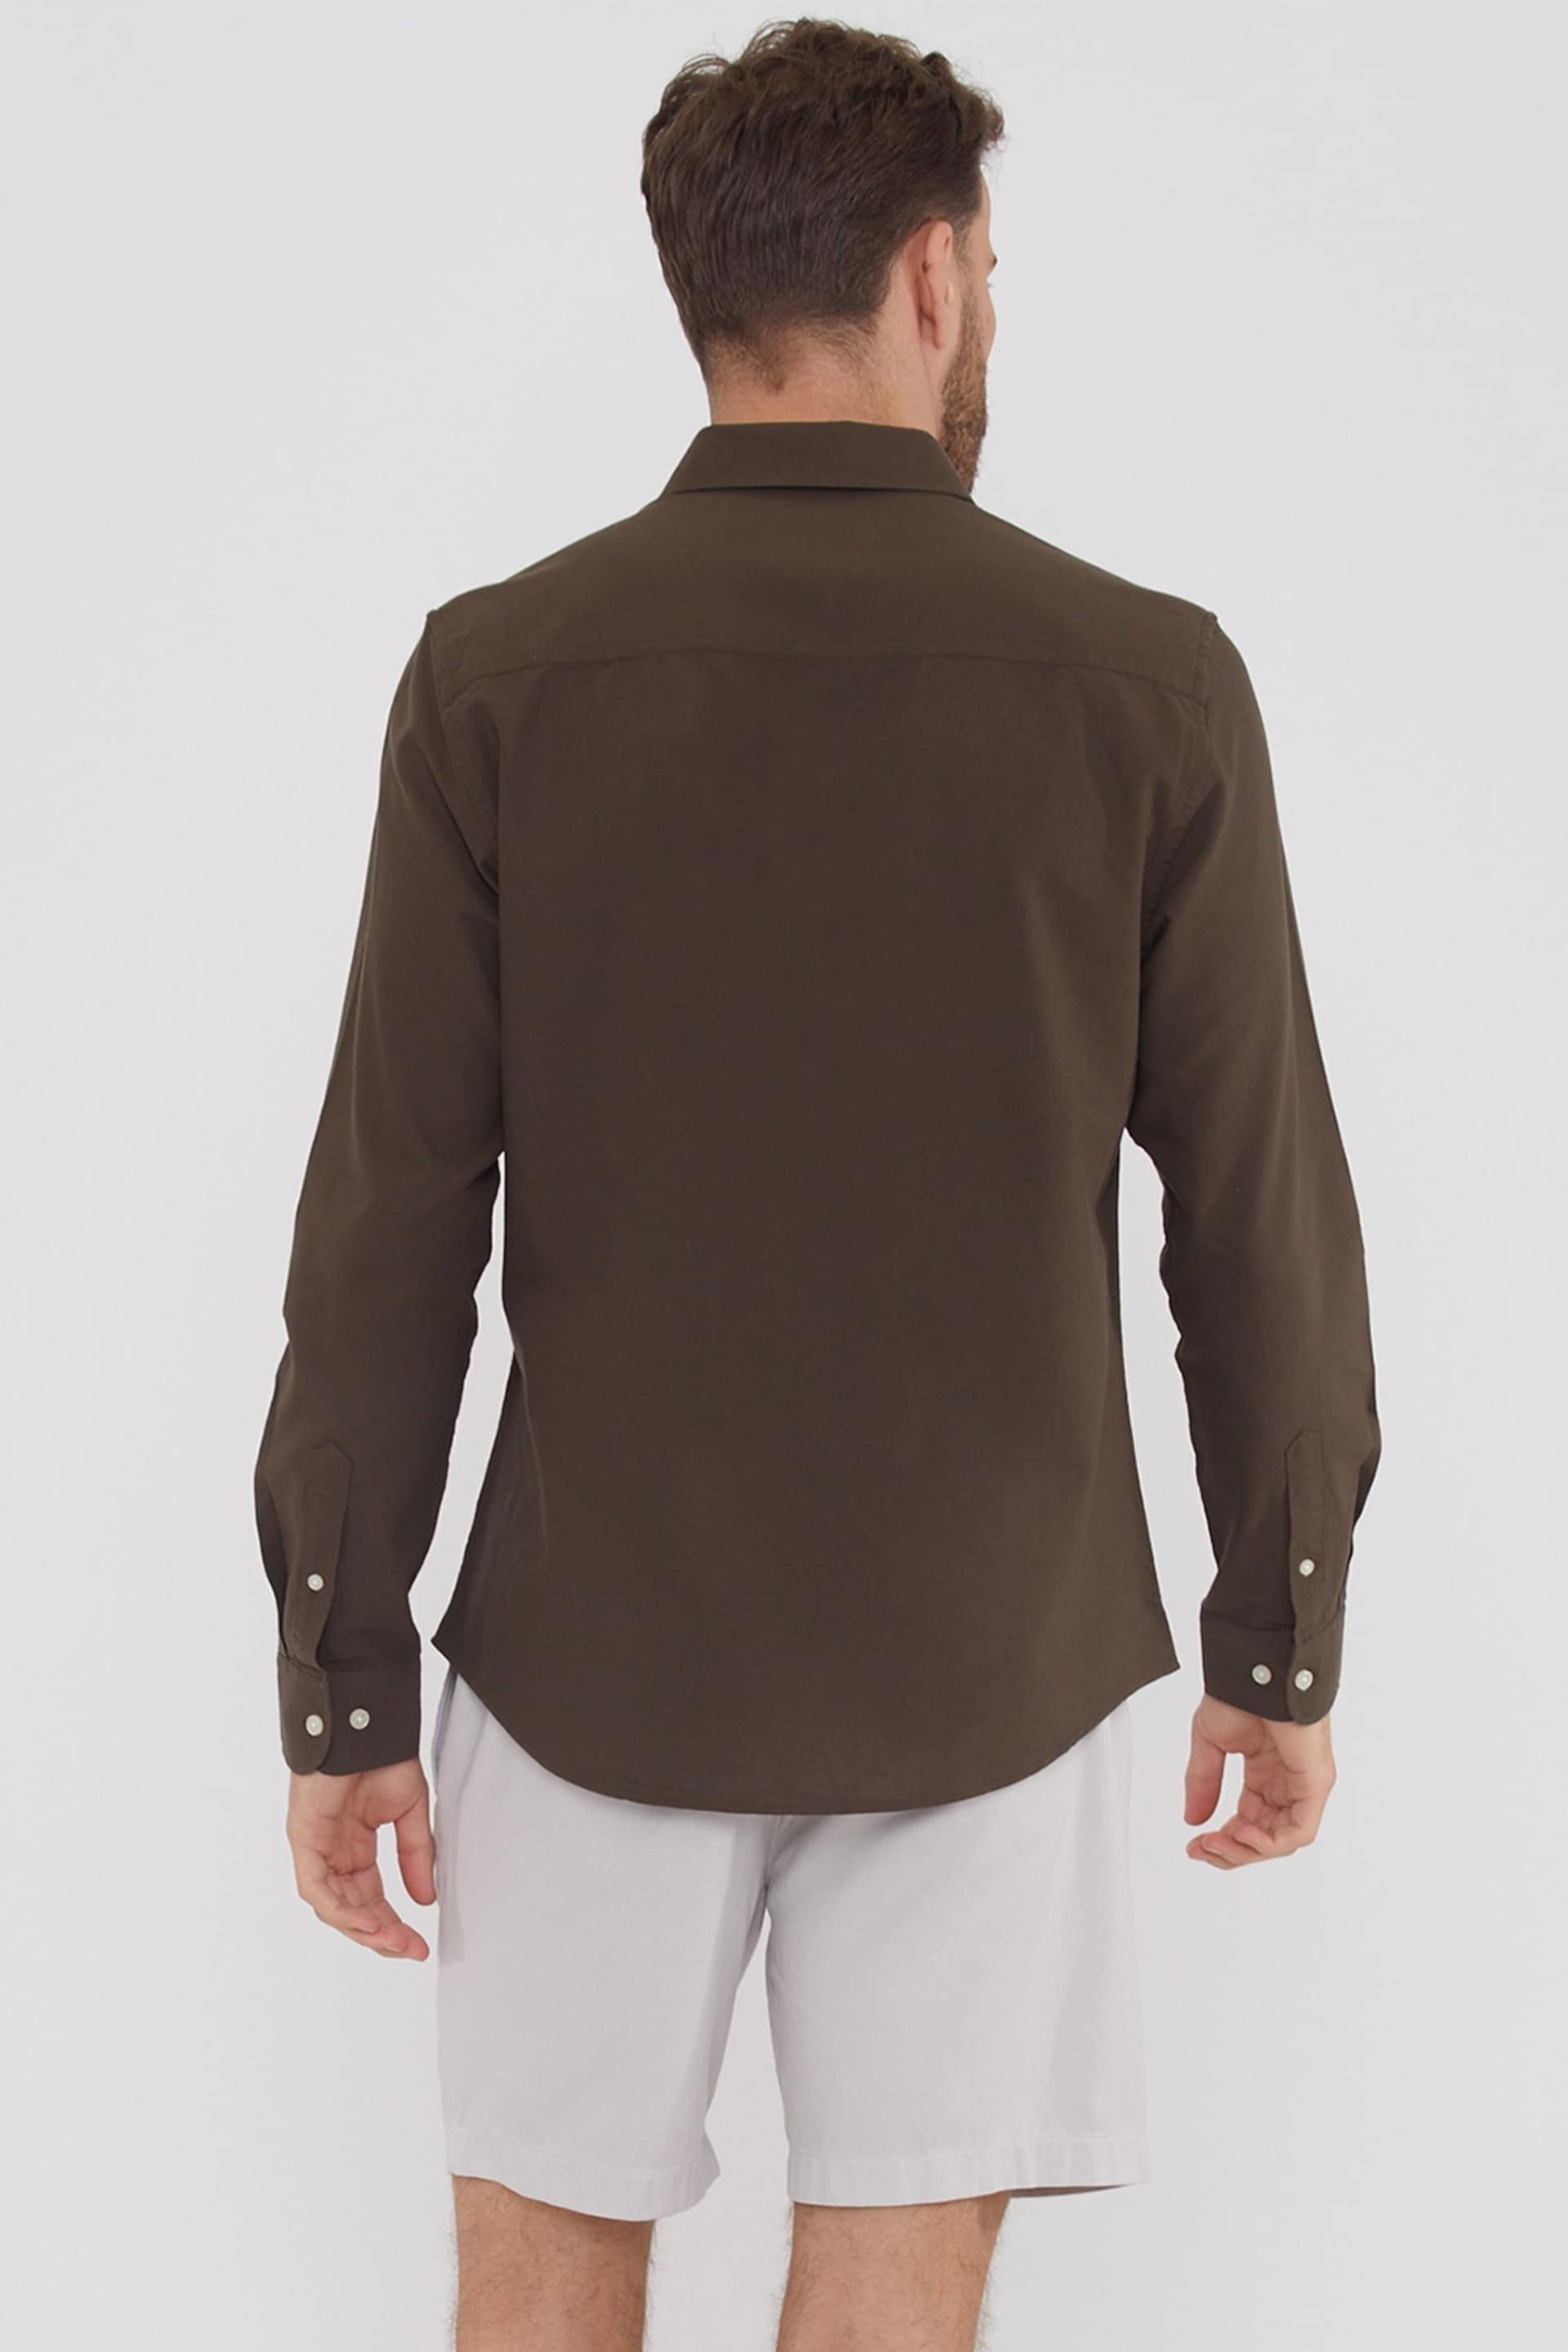 Threadbare Chocolate Oxford Cotton Long Sleeve Shirt - Image 2 of 4